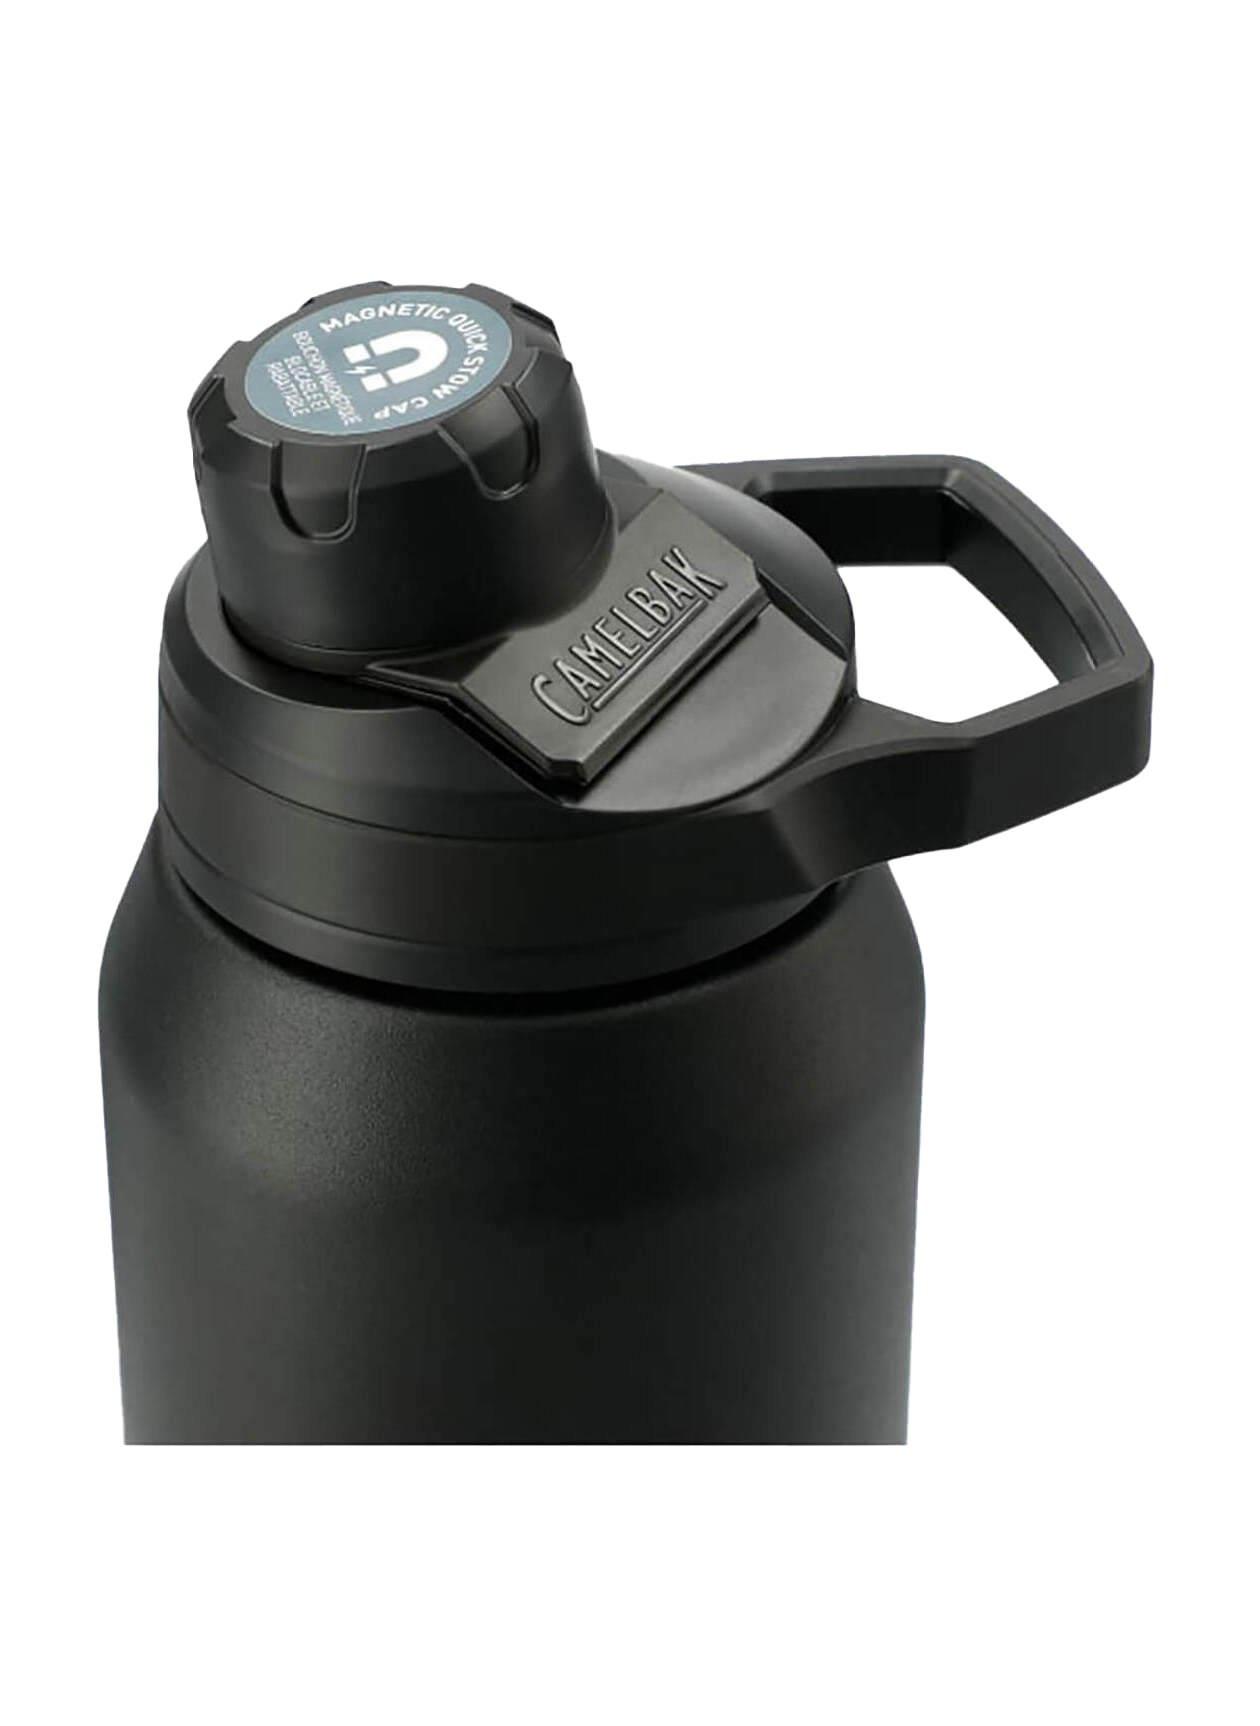 CamelBak Chute Mag 32 oz. Vacuum Insulated Bottle - Black